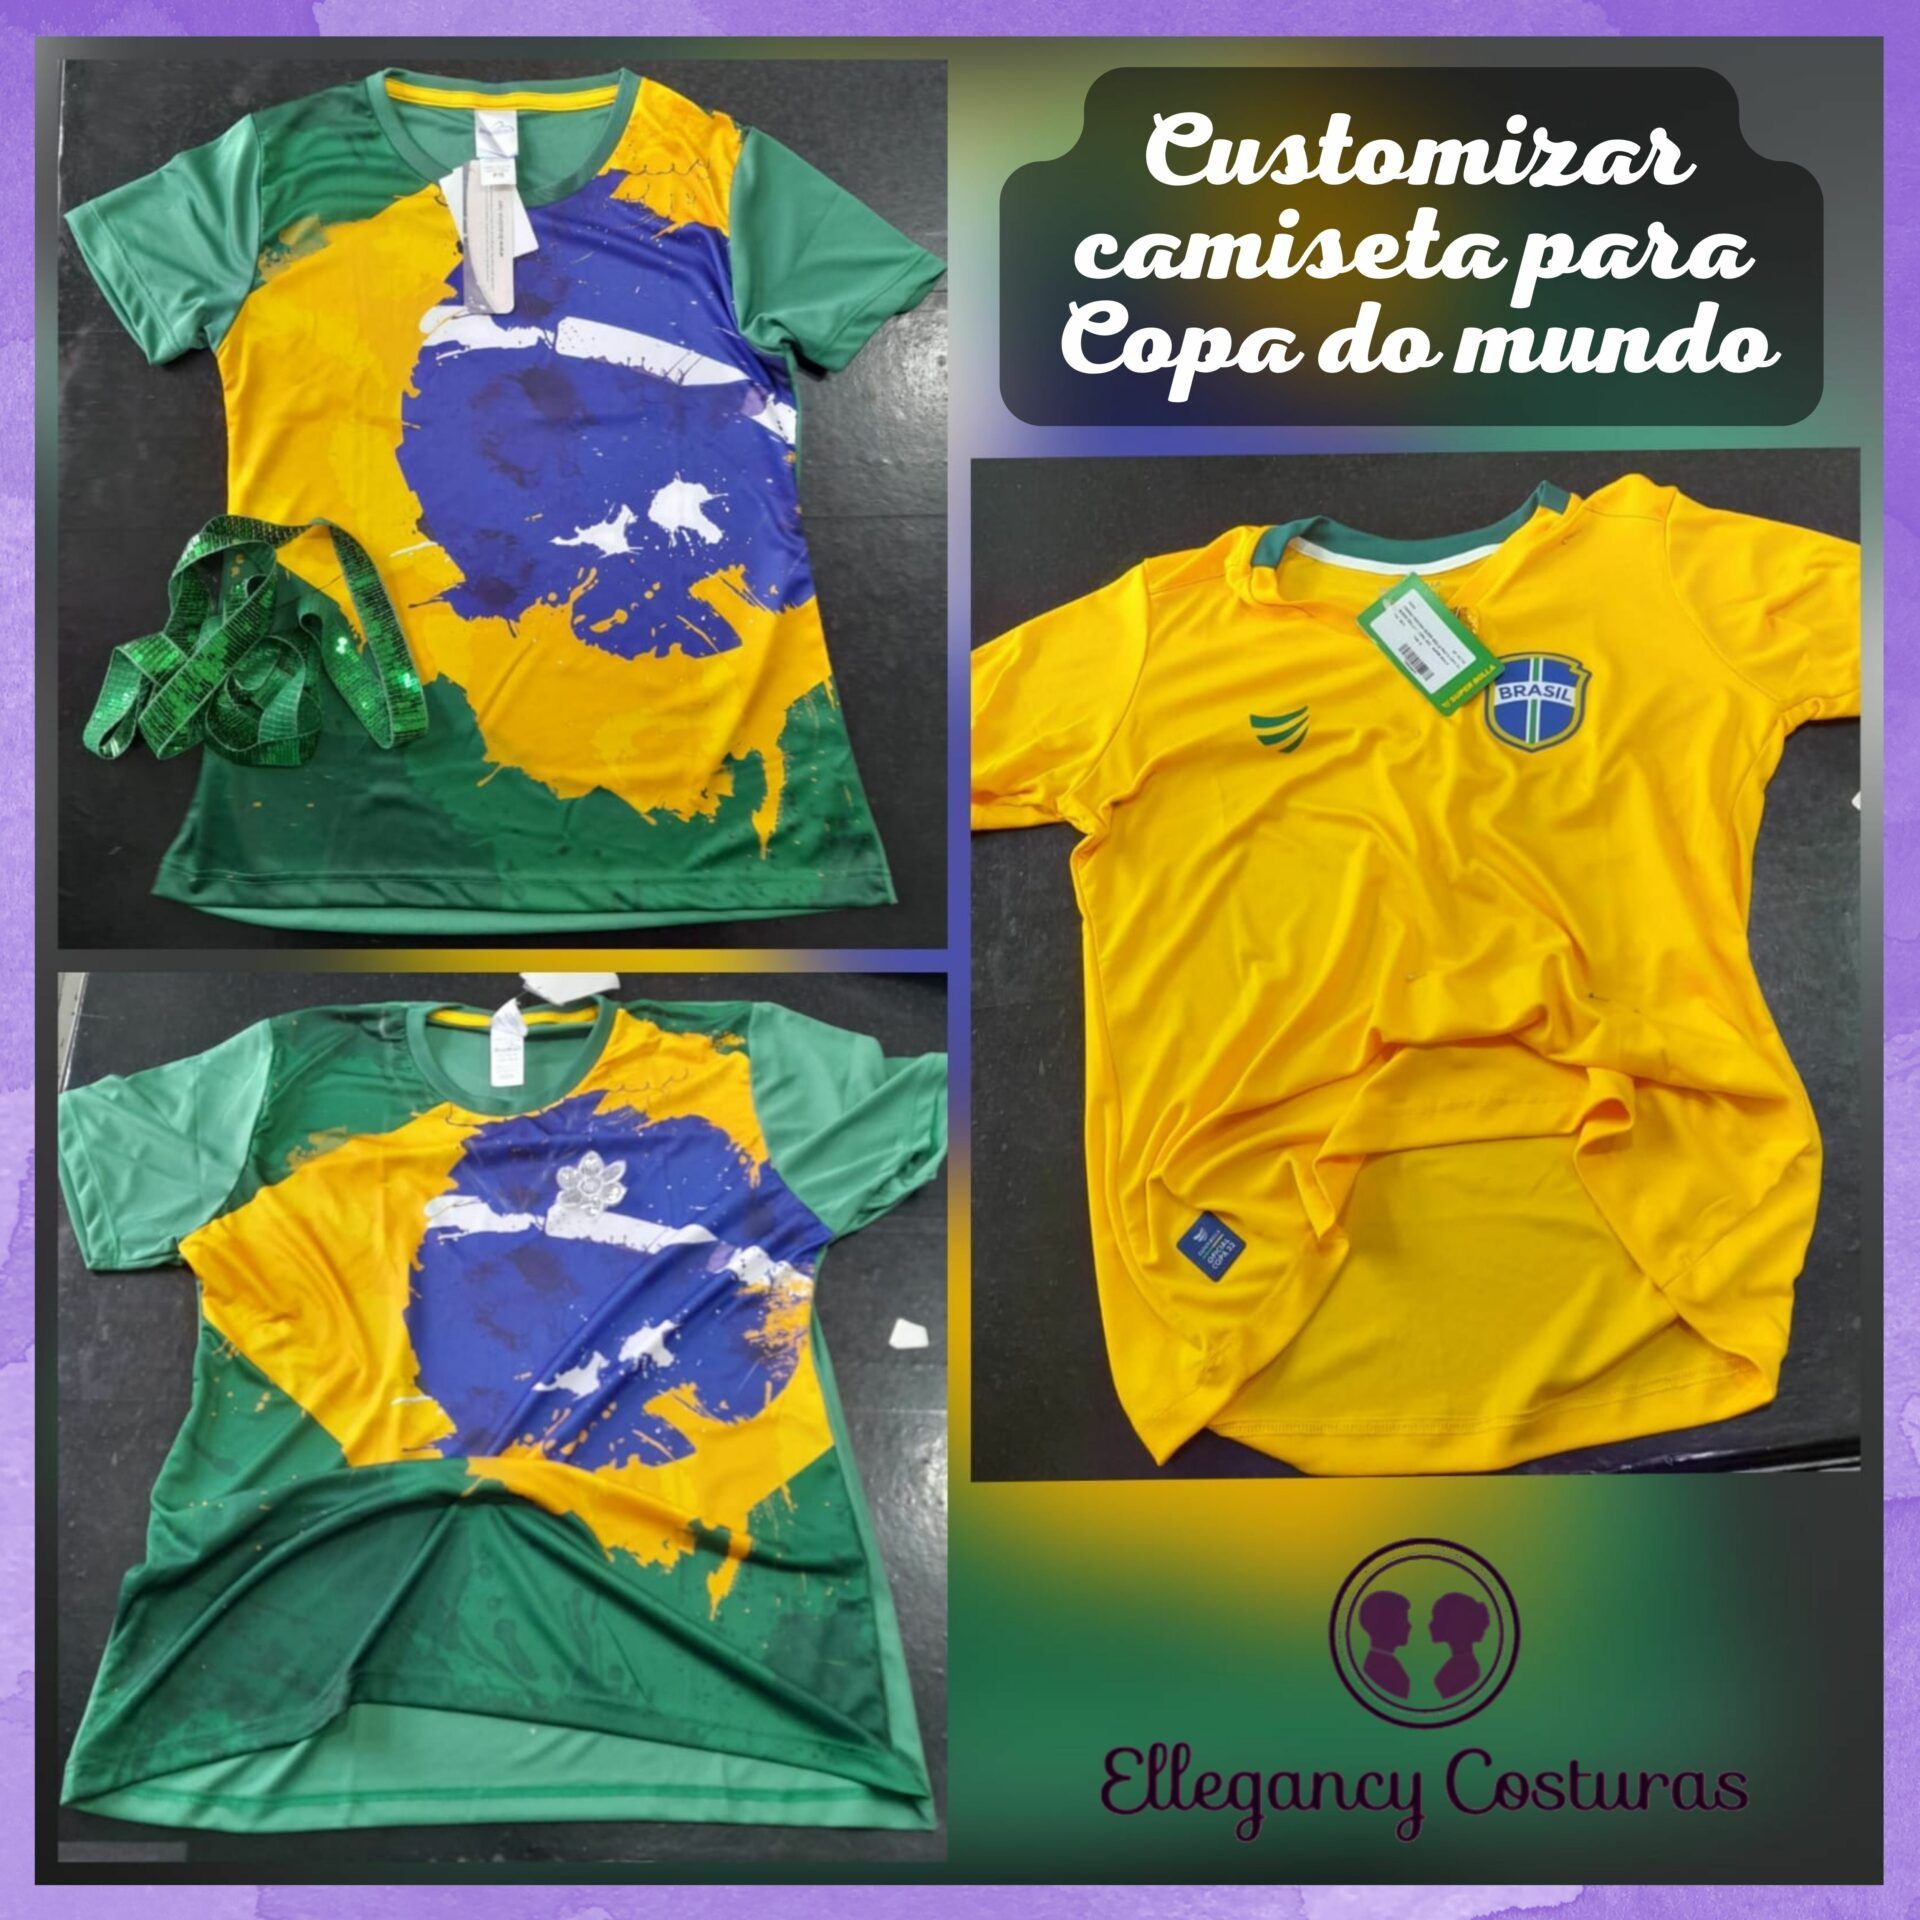 Customizar camiseta para Copa do Mundo 1